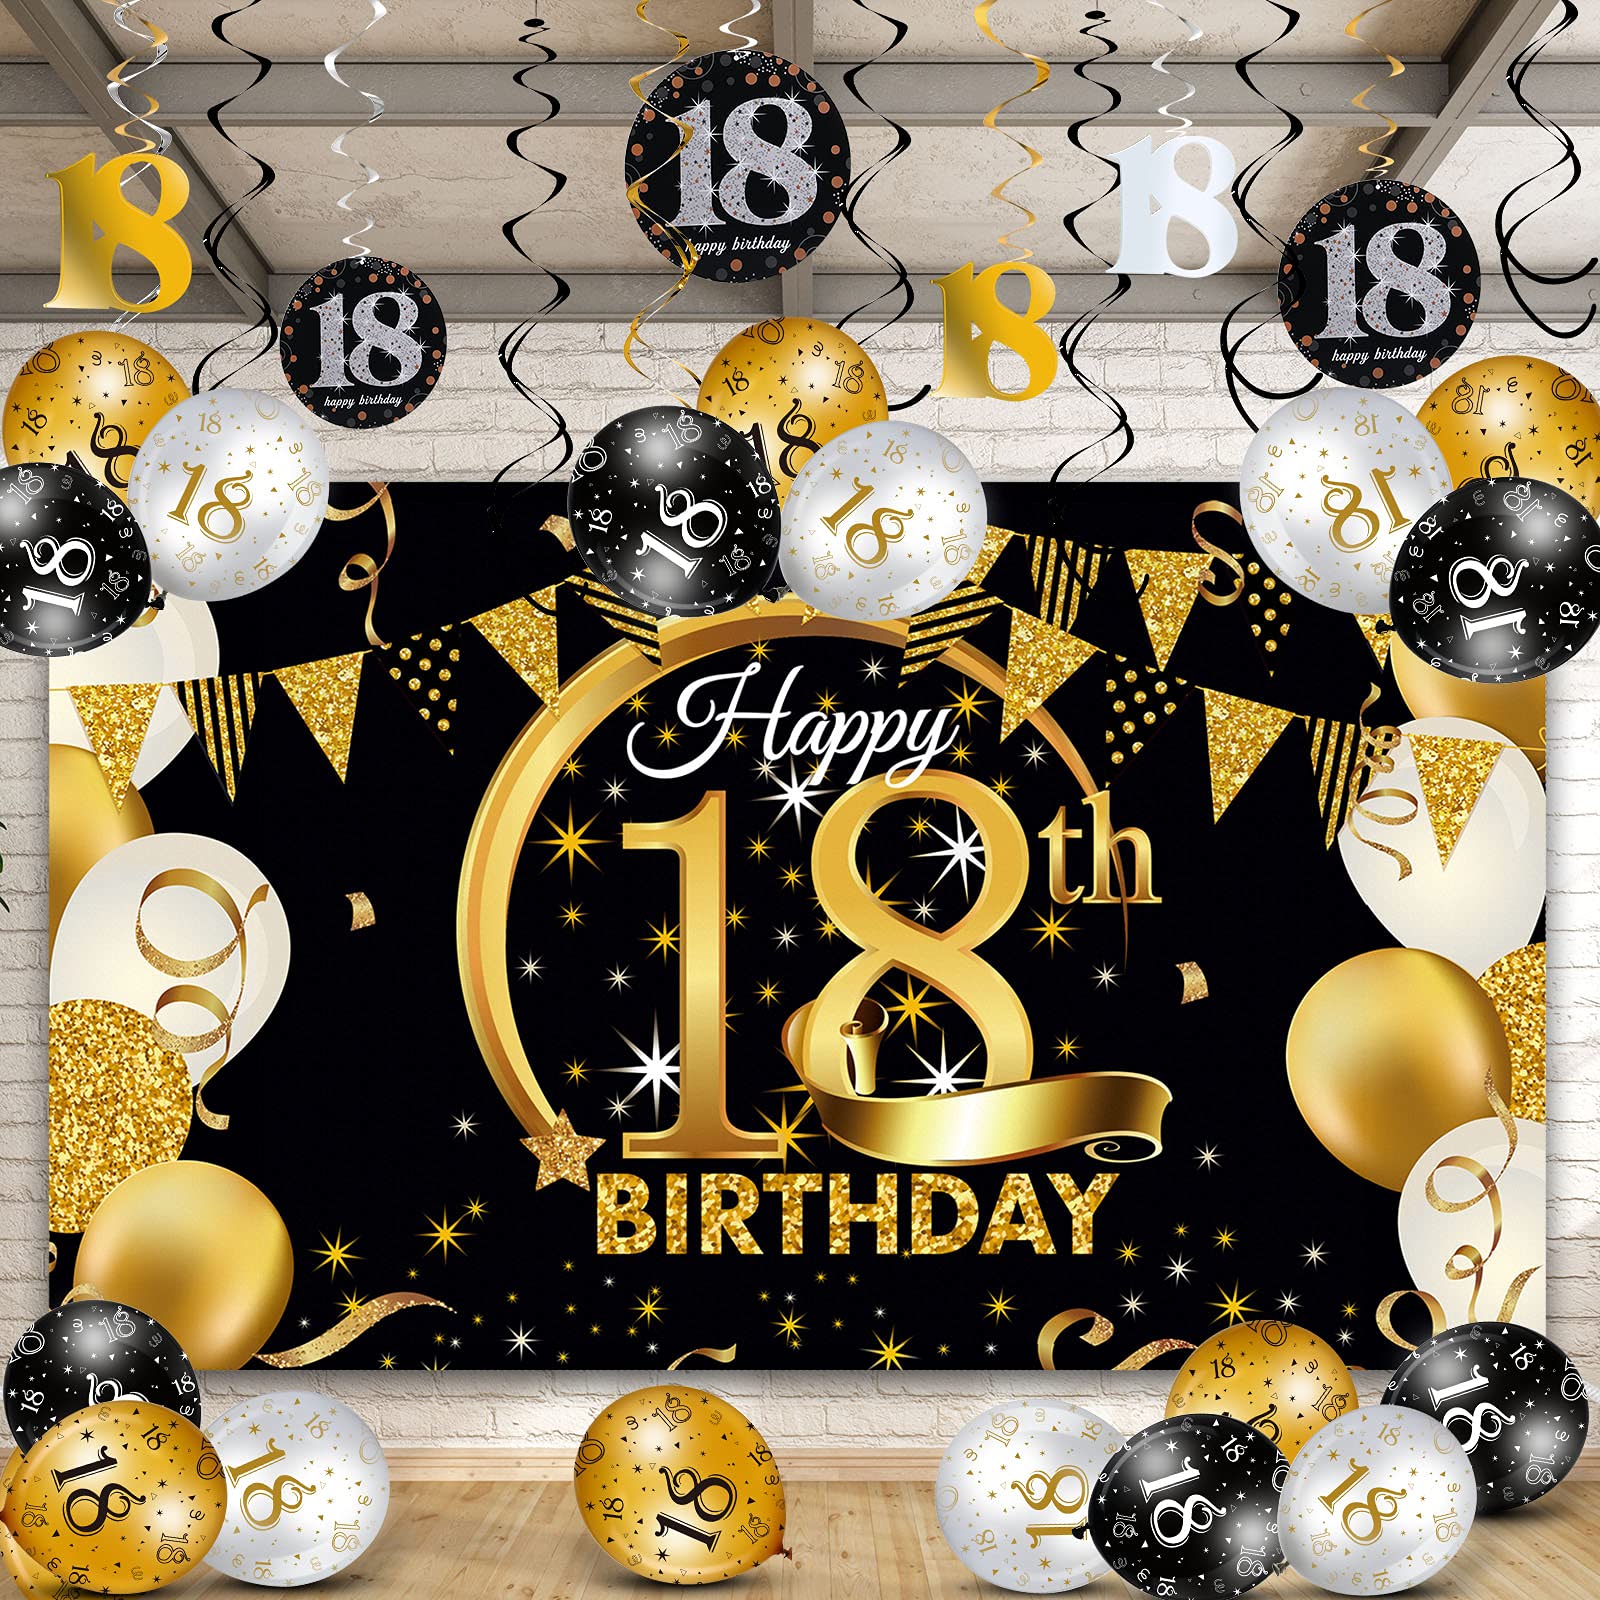 Happy 18th Birthday Celebration Ideas